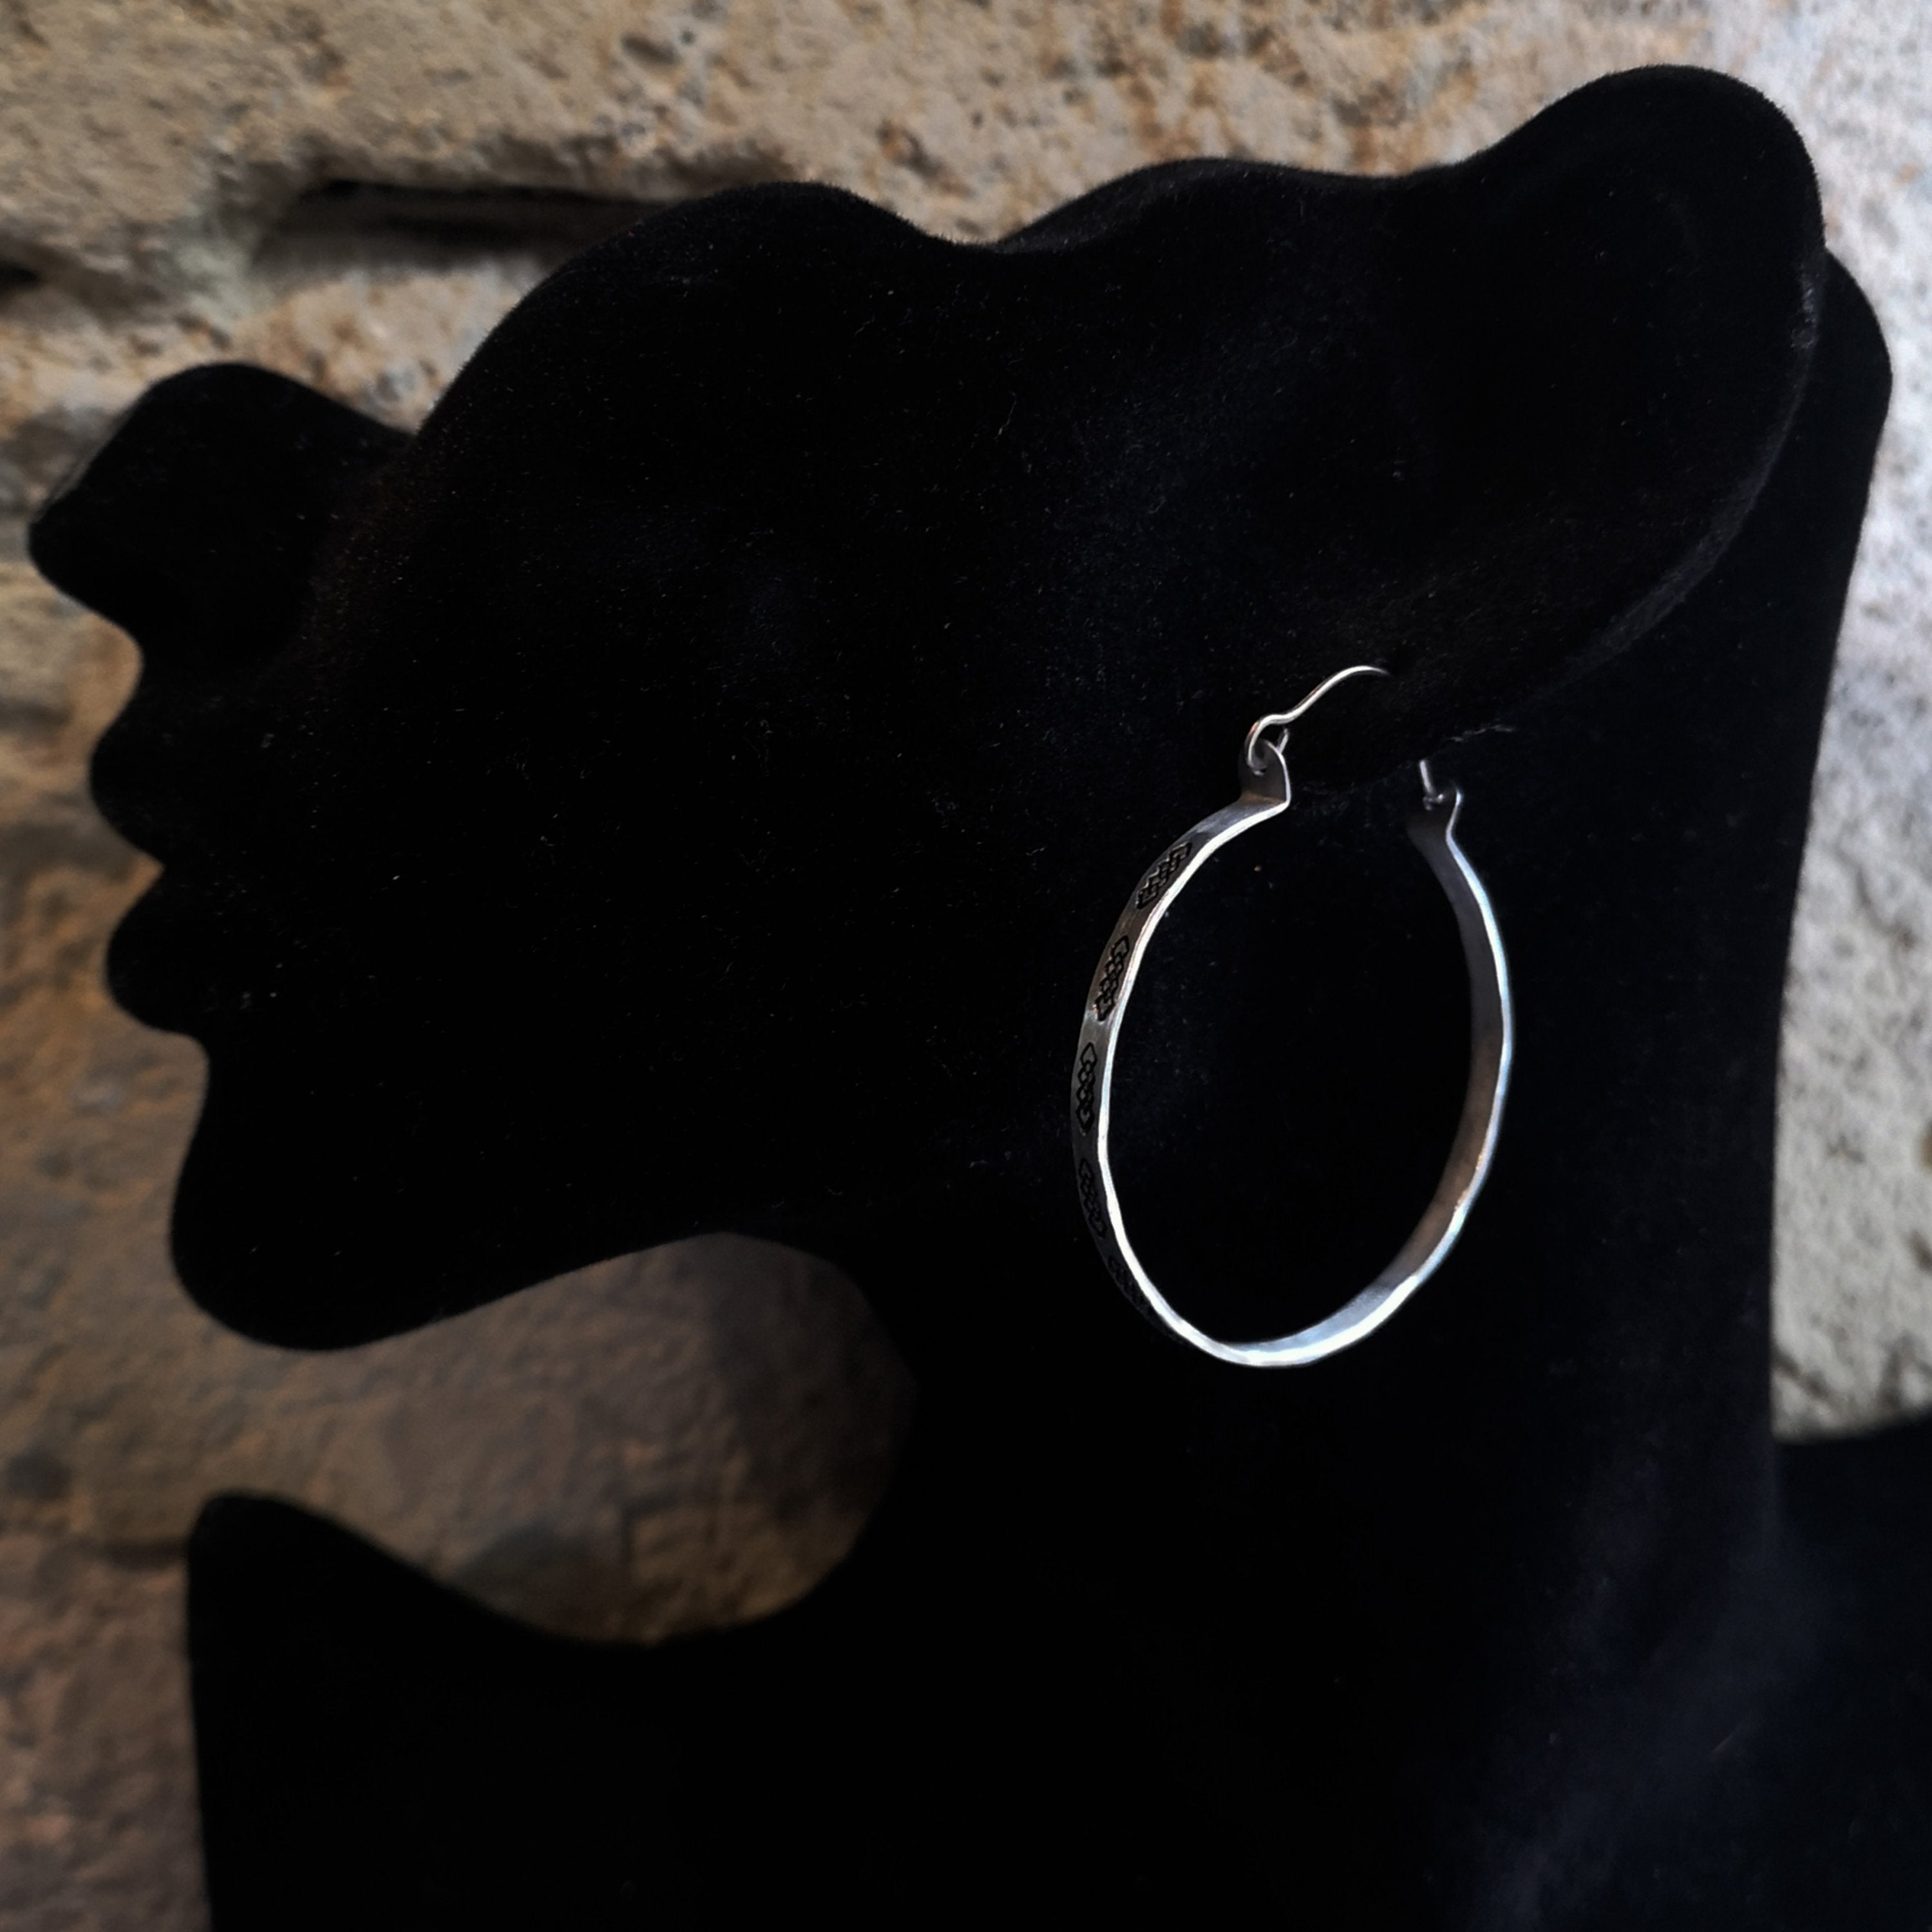 Lightweight hoop earrings - Titanium earwires - Boho hand hammered - Rustic stamped unique hoops - Hypoallergenic - Madebyjenwren